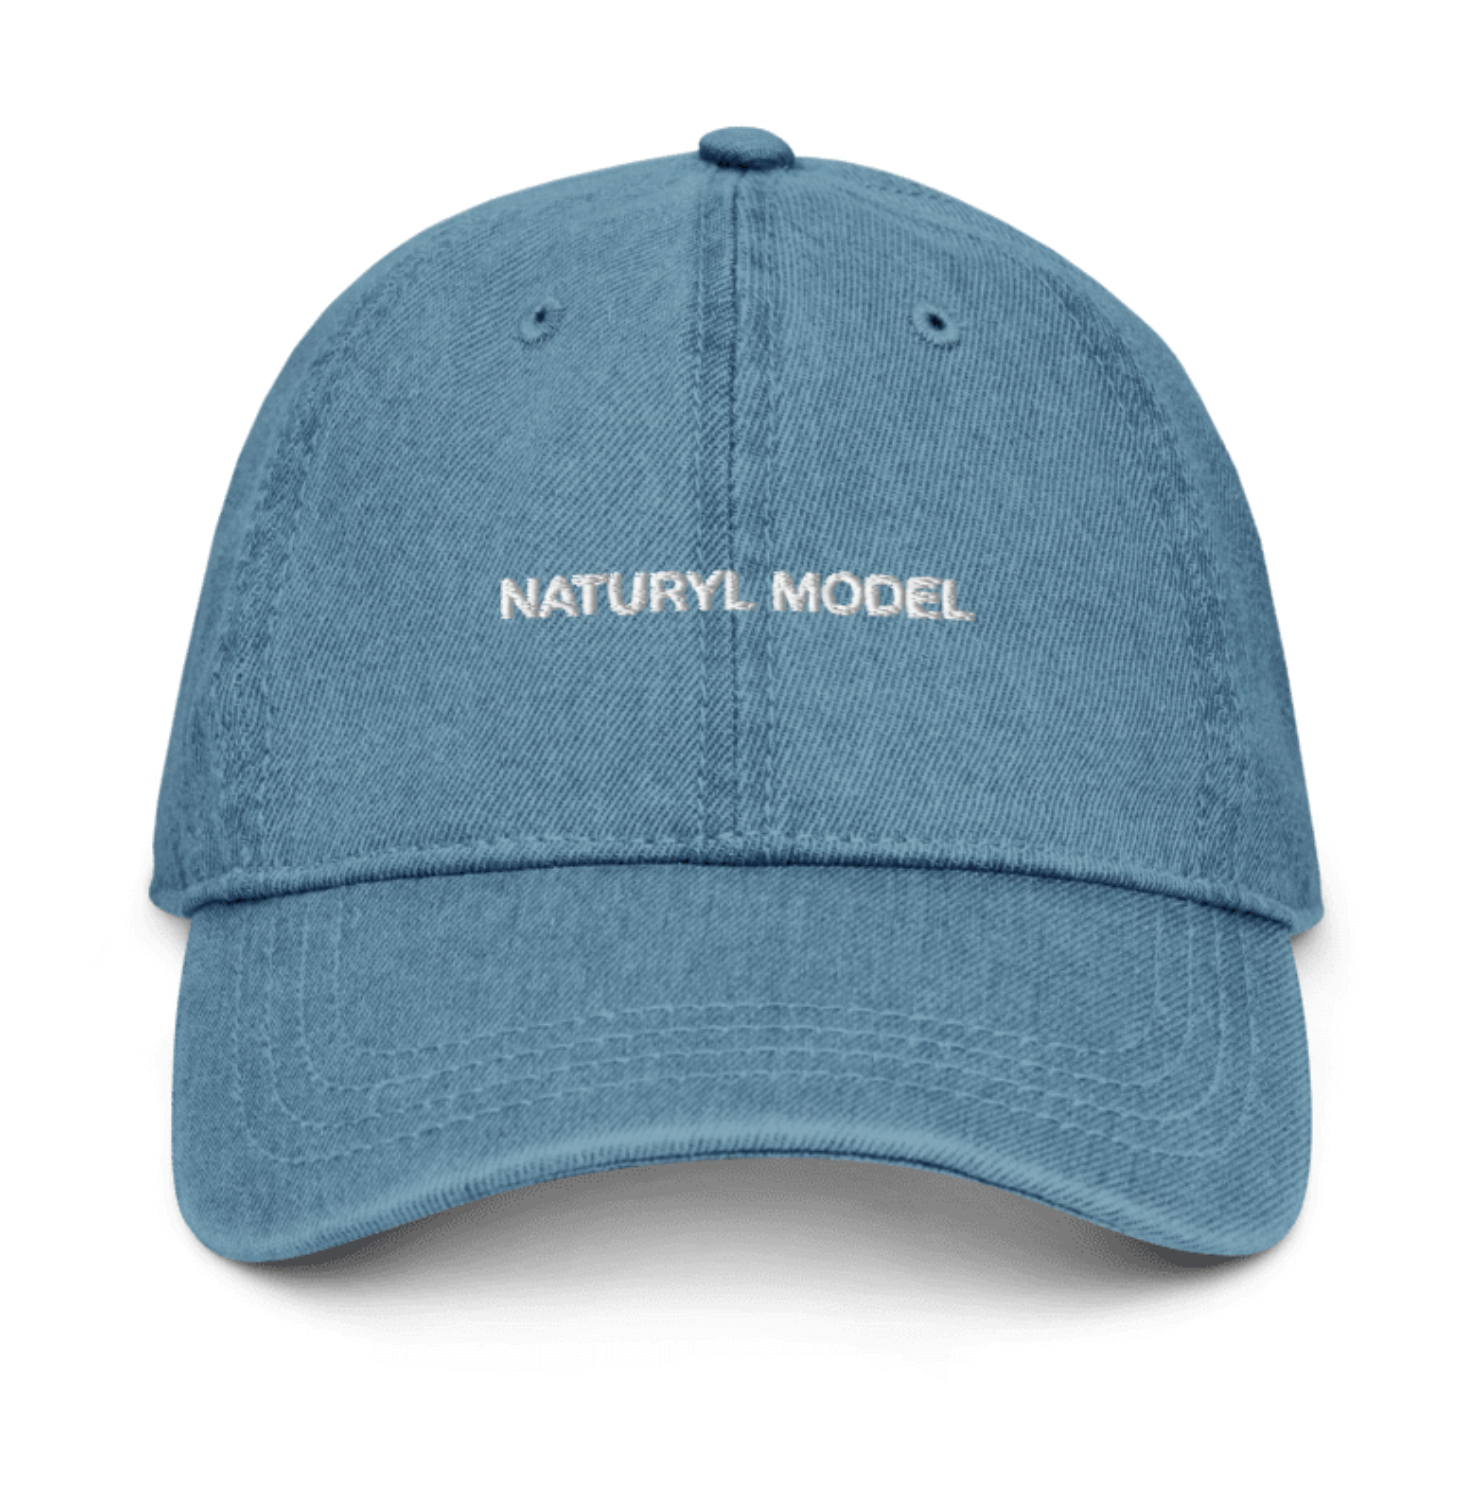 THE NATURYL MODEL DENIM HAT